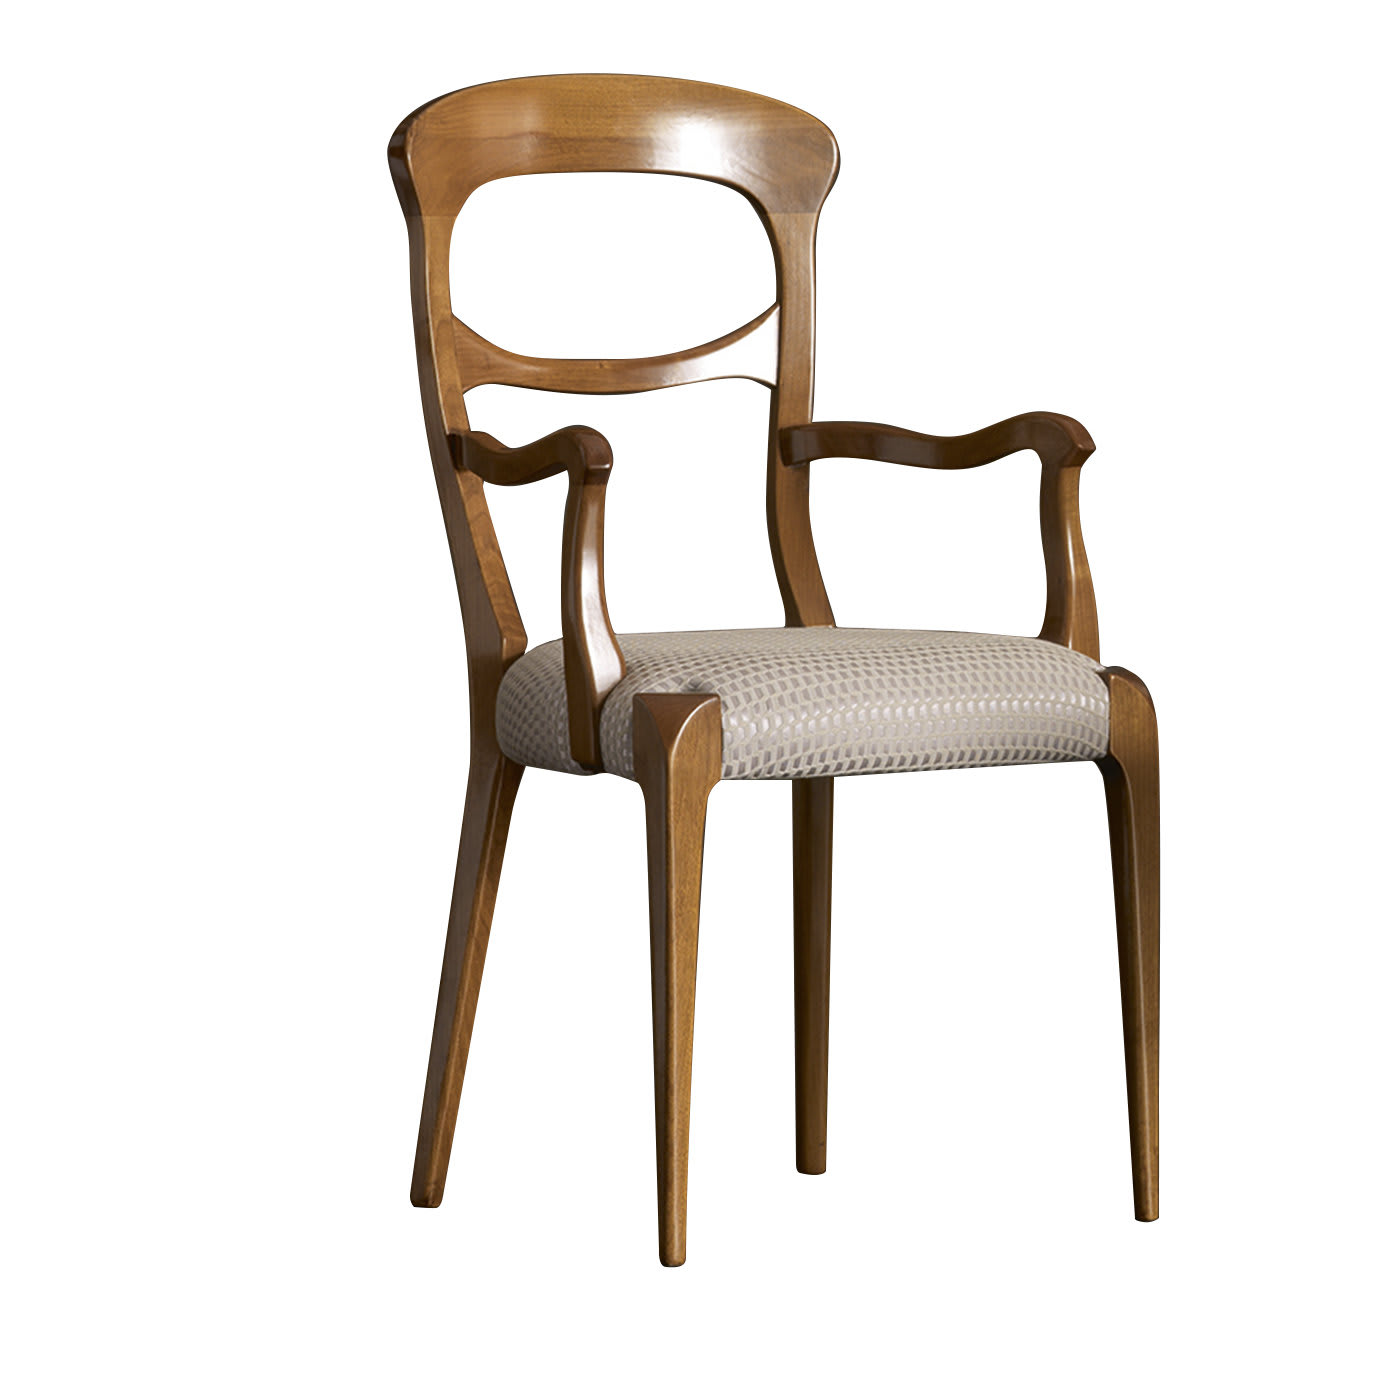 Oleandro Chair - Cantiero Verona